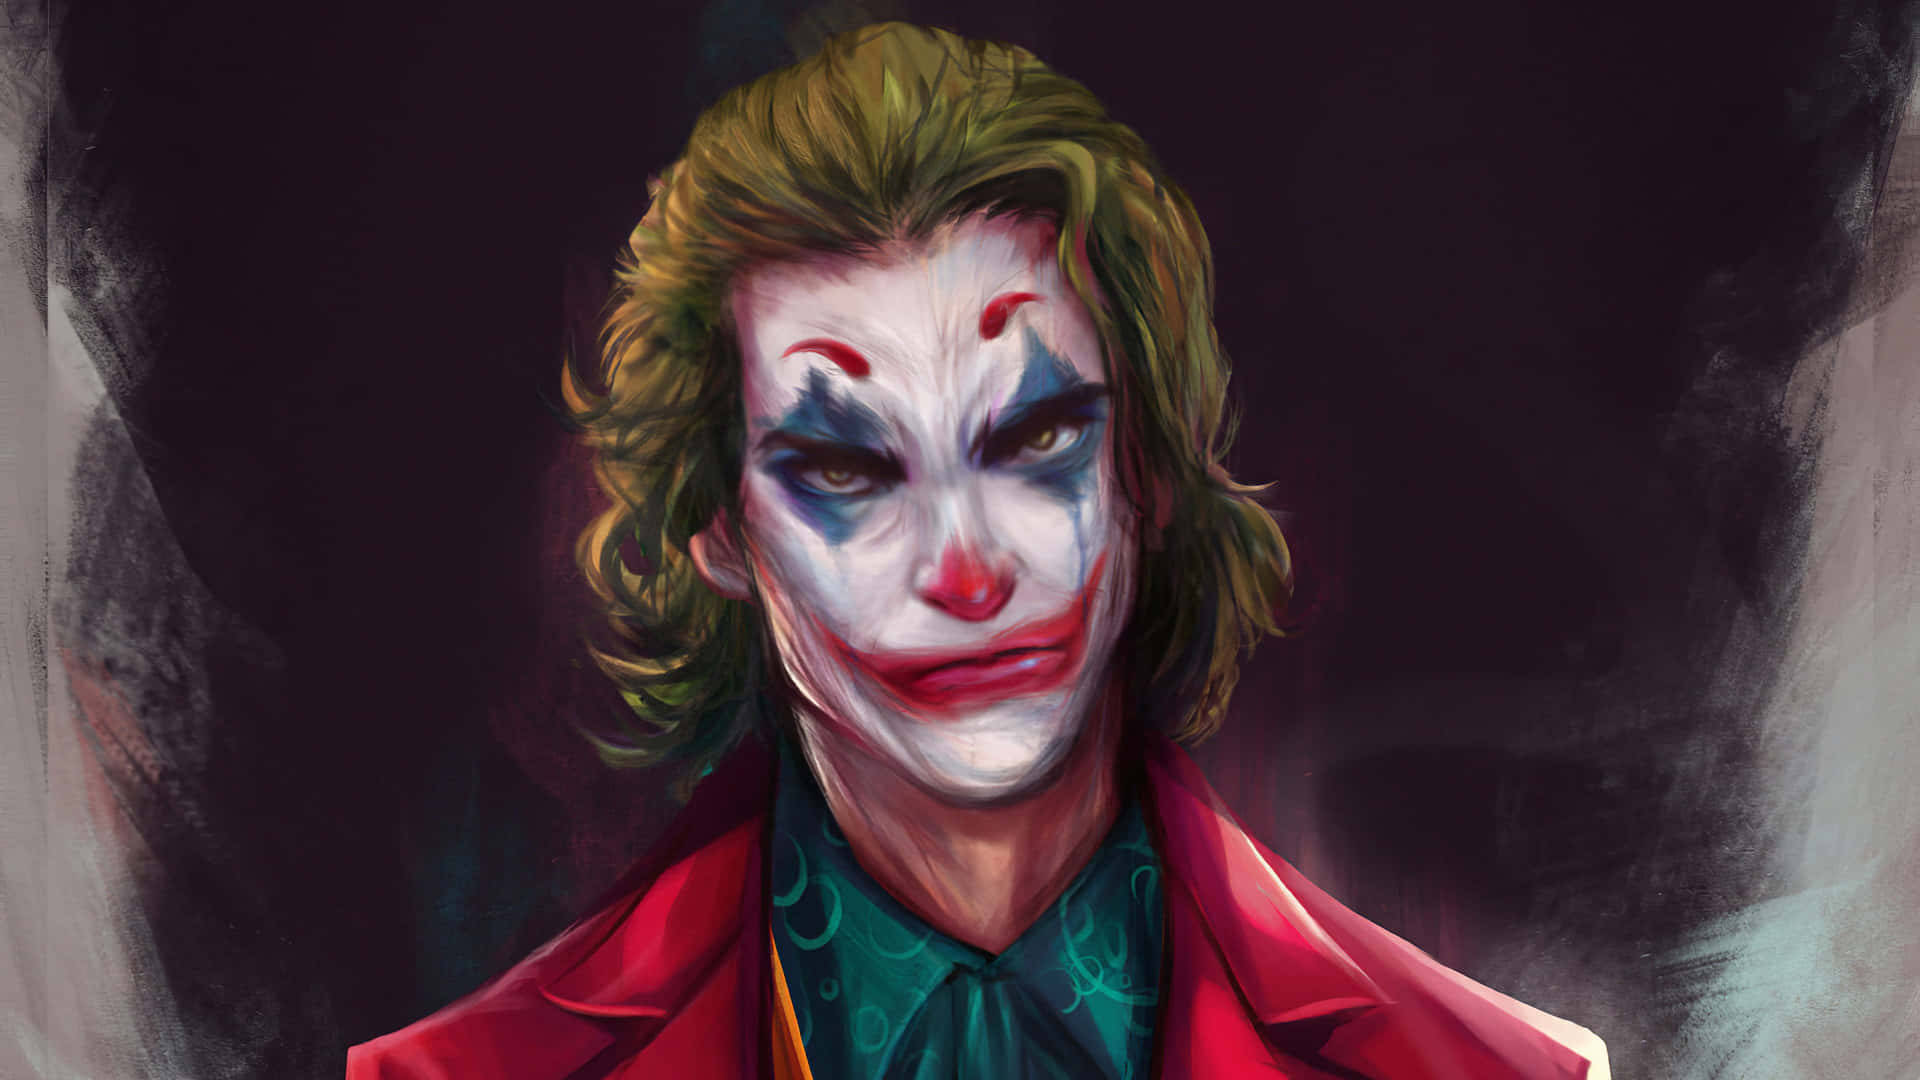 Intense Joker Painting with Fiery Vibrance Wallpaper